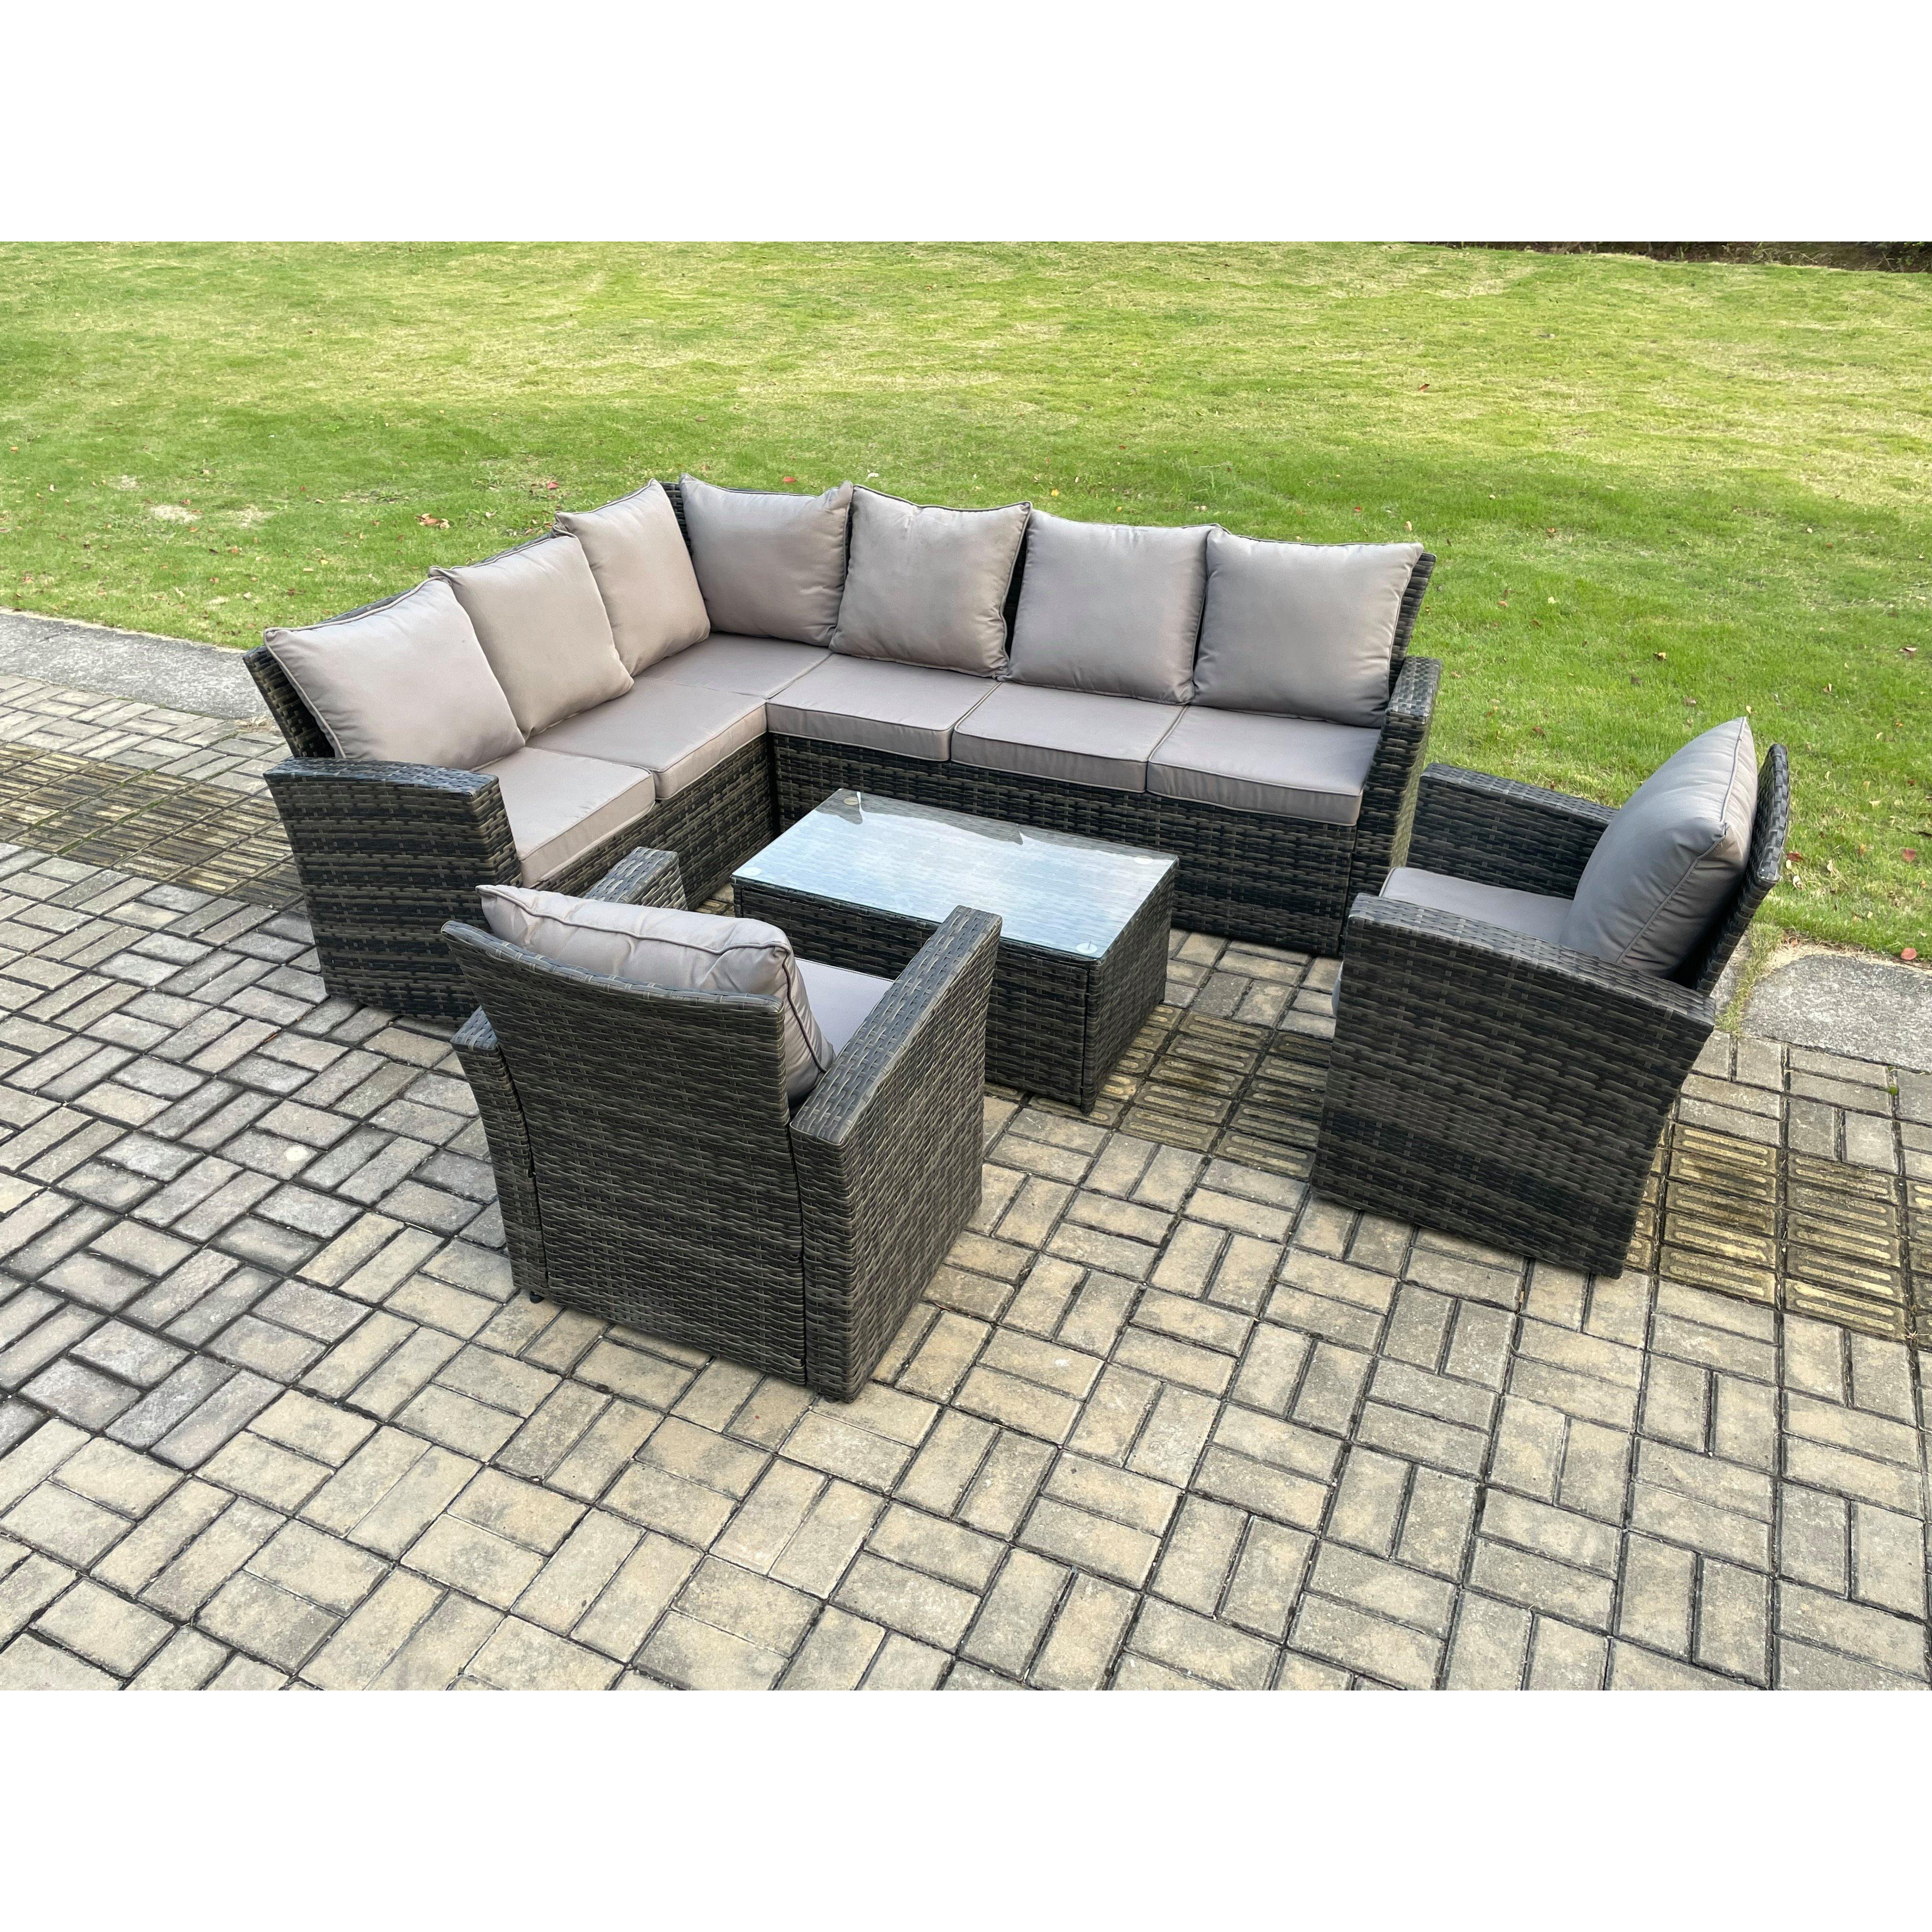 8 Seater High Back Outdoor Garden Furniture Set Rattan Corner Sofa Set With 2 Armchairs Dark Grey Mixed - image 1